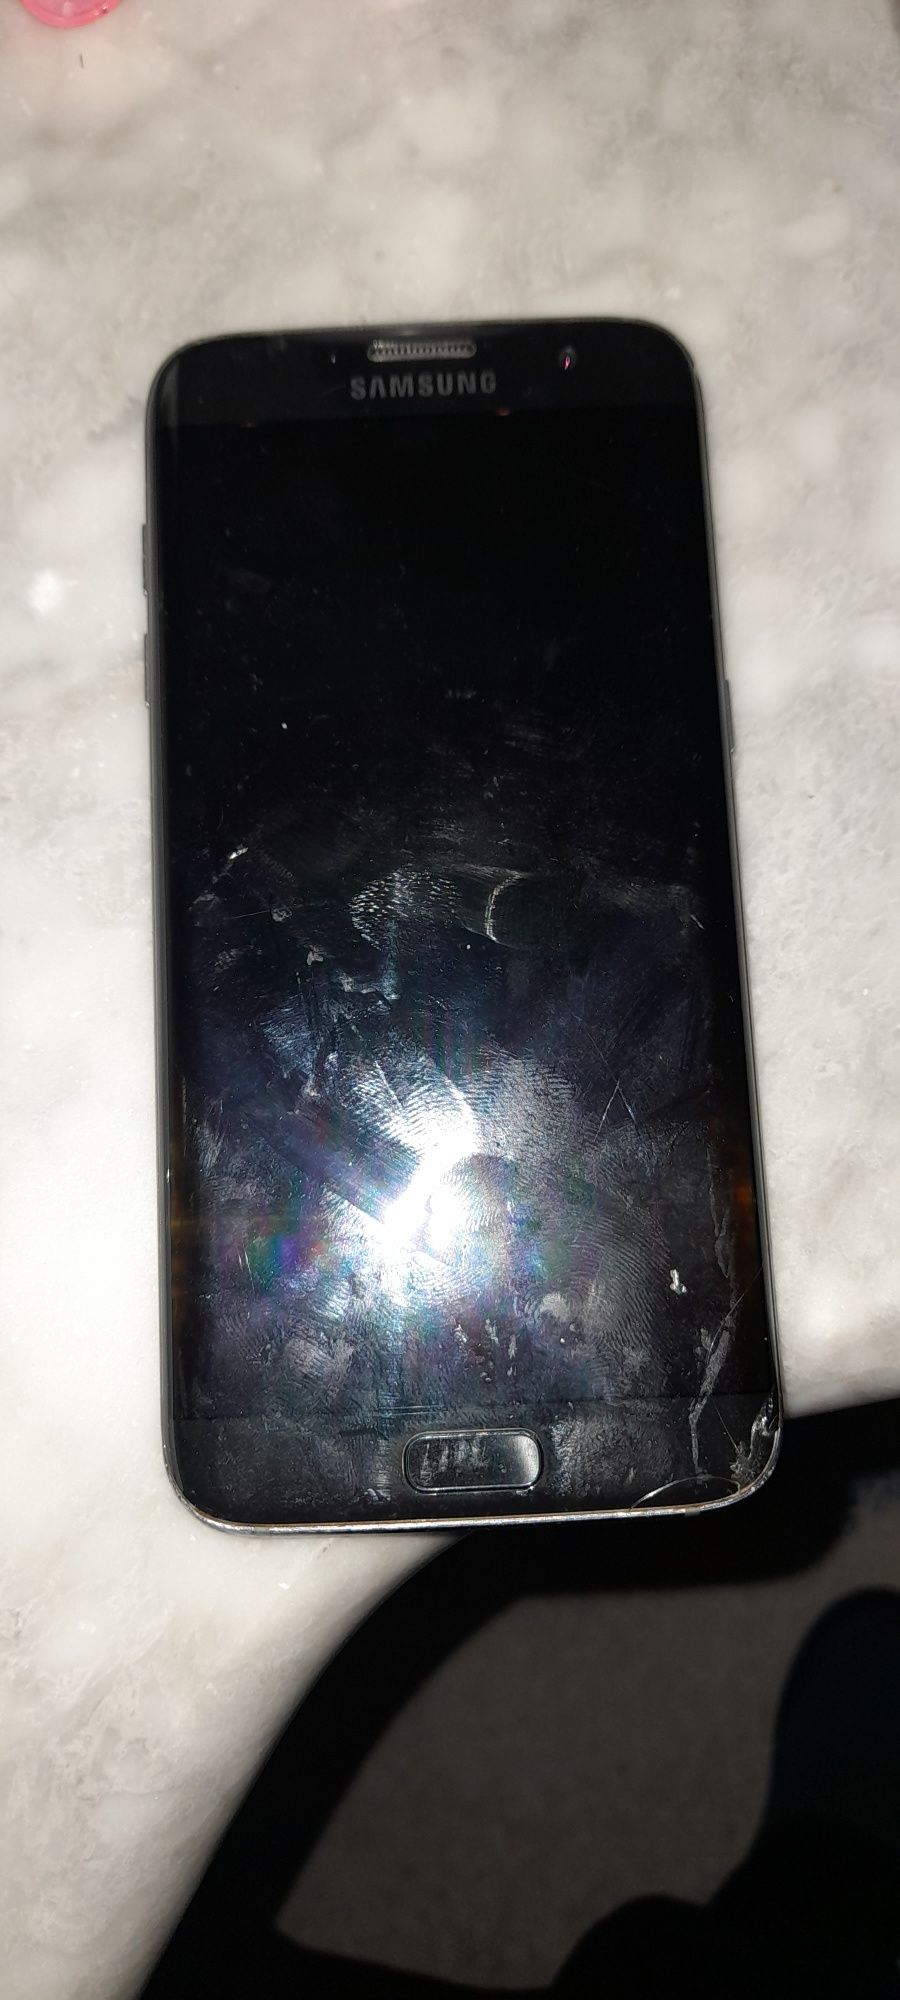 Samsung s7 edge avariado